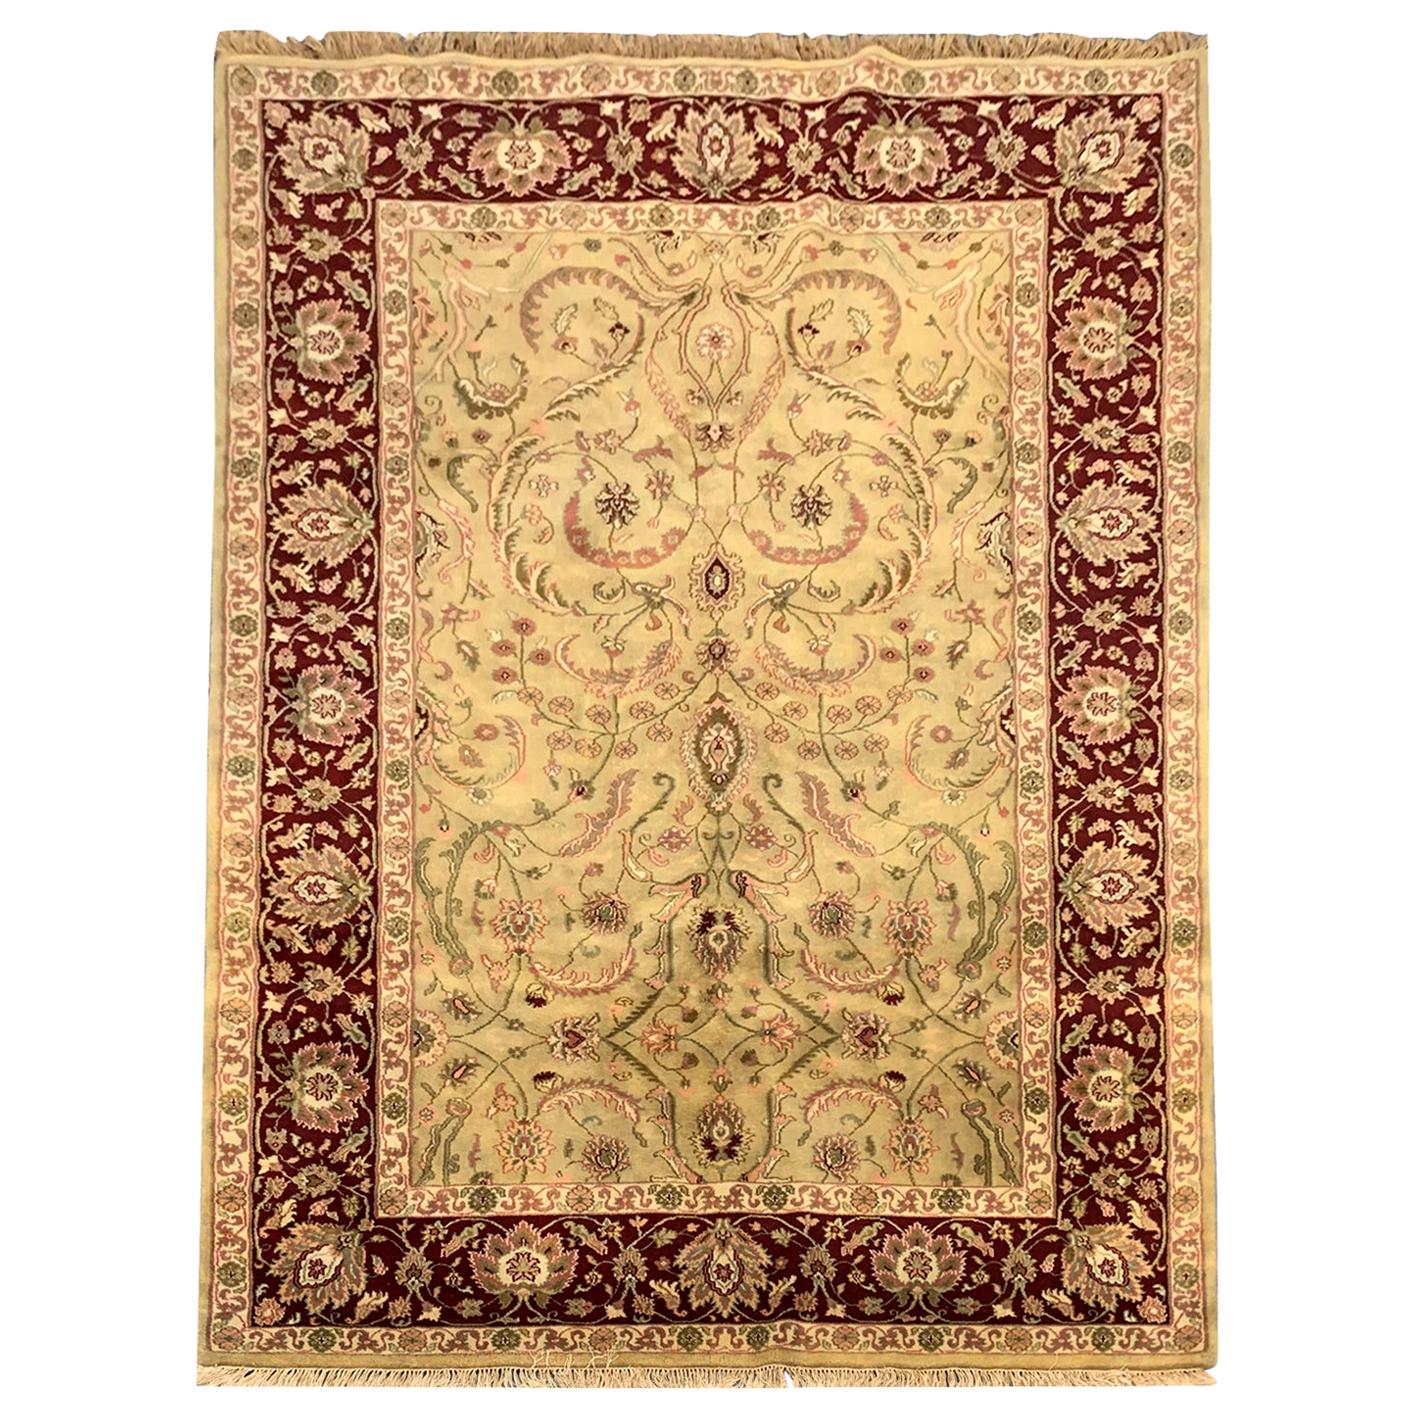 Vintage Rug Gold Olive Green Wool Area Rug Handmade Oriental Carpet